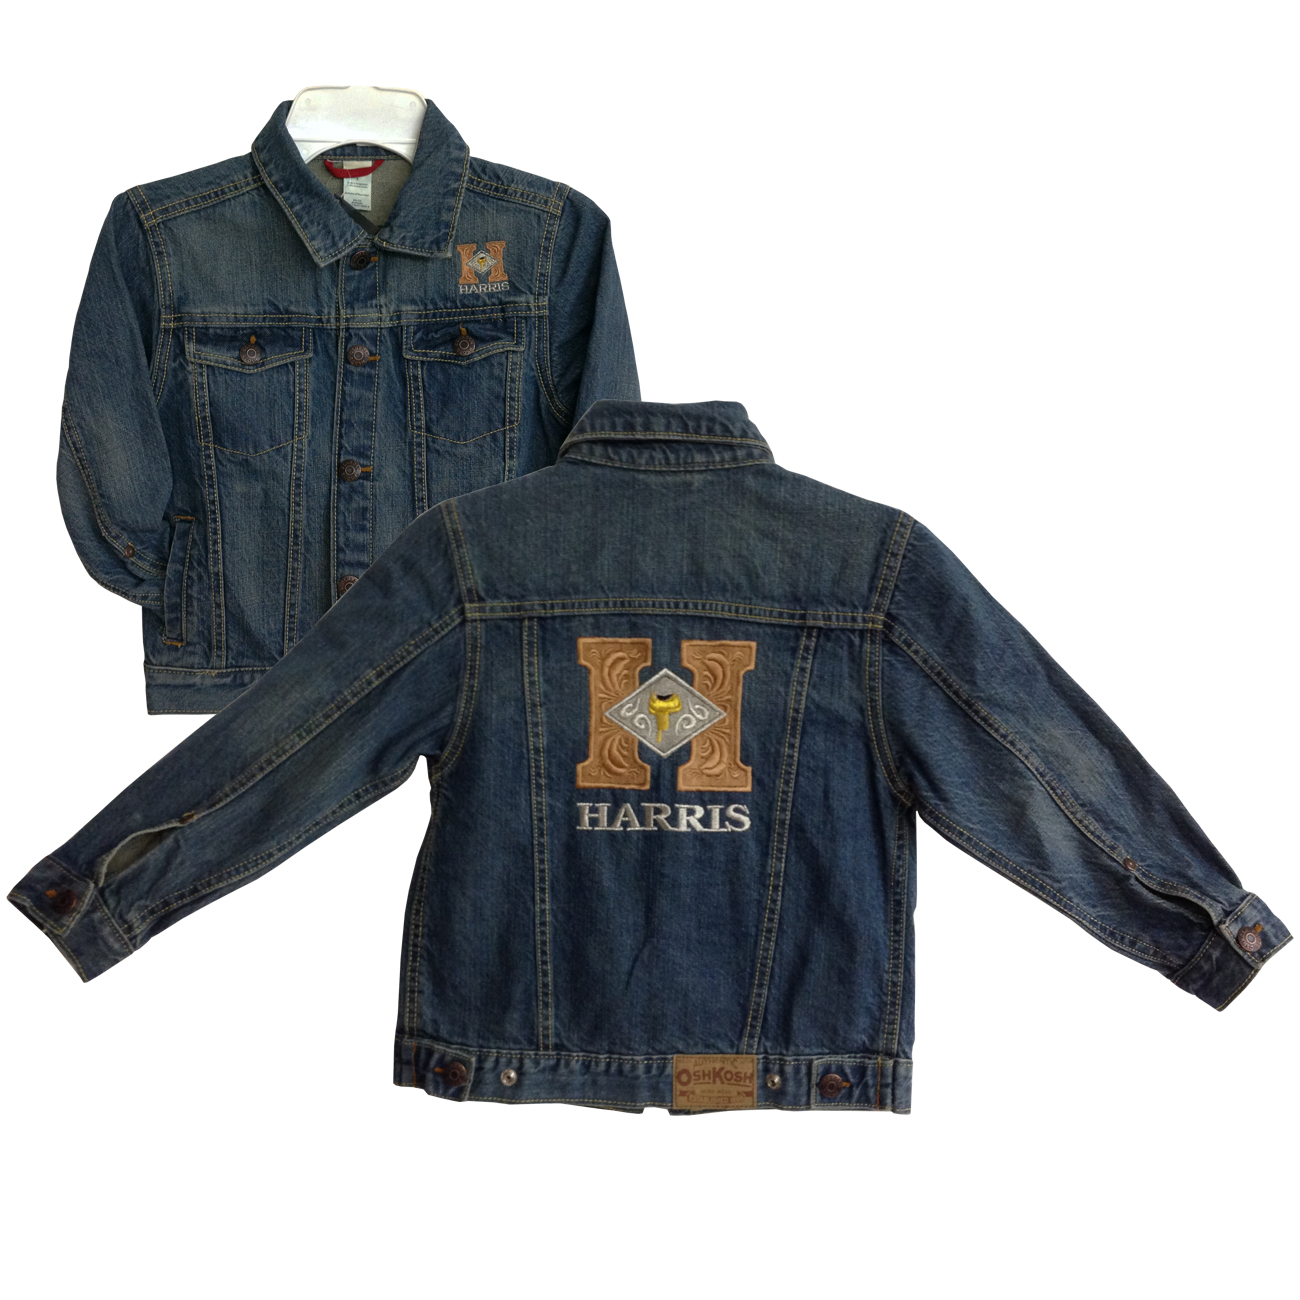 Harris Youth Denim Jacket - Tan Logo